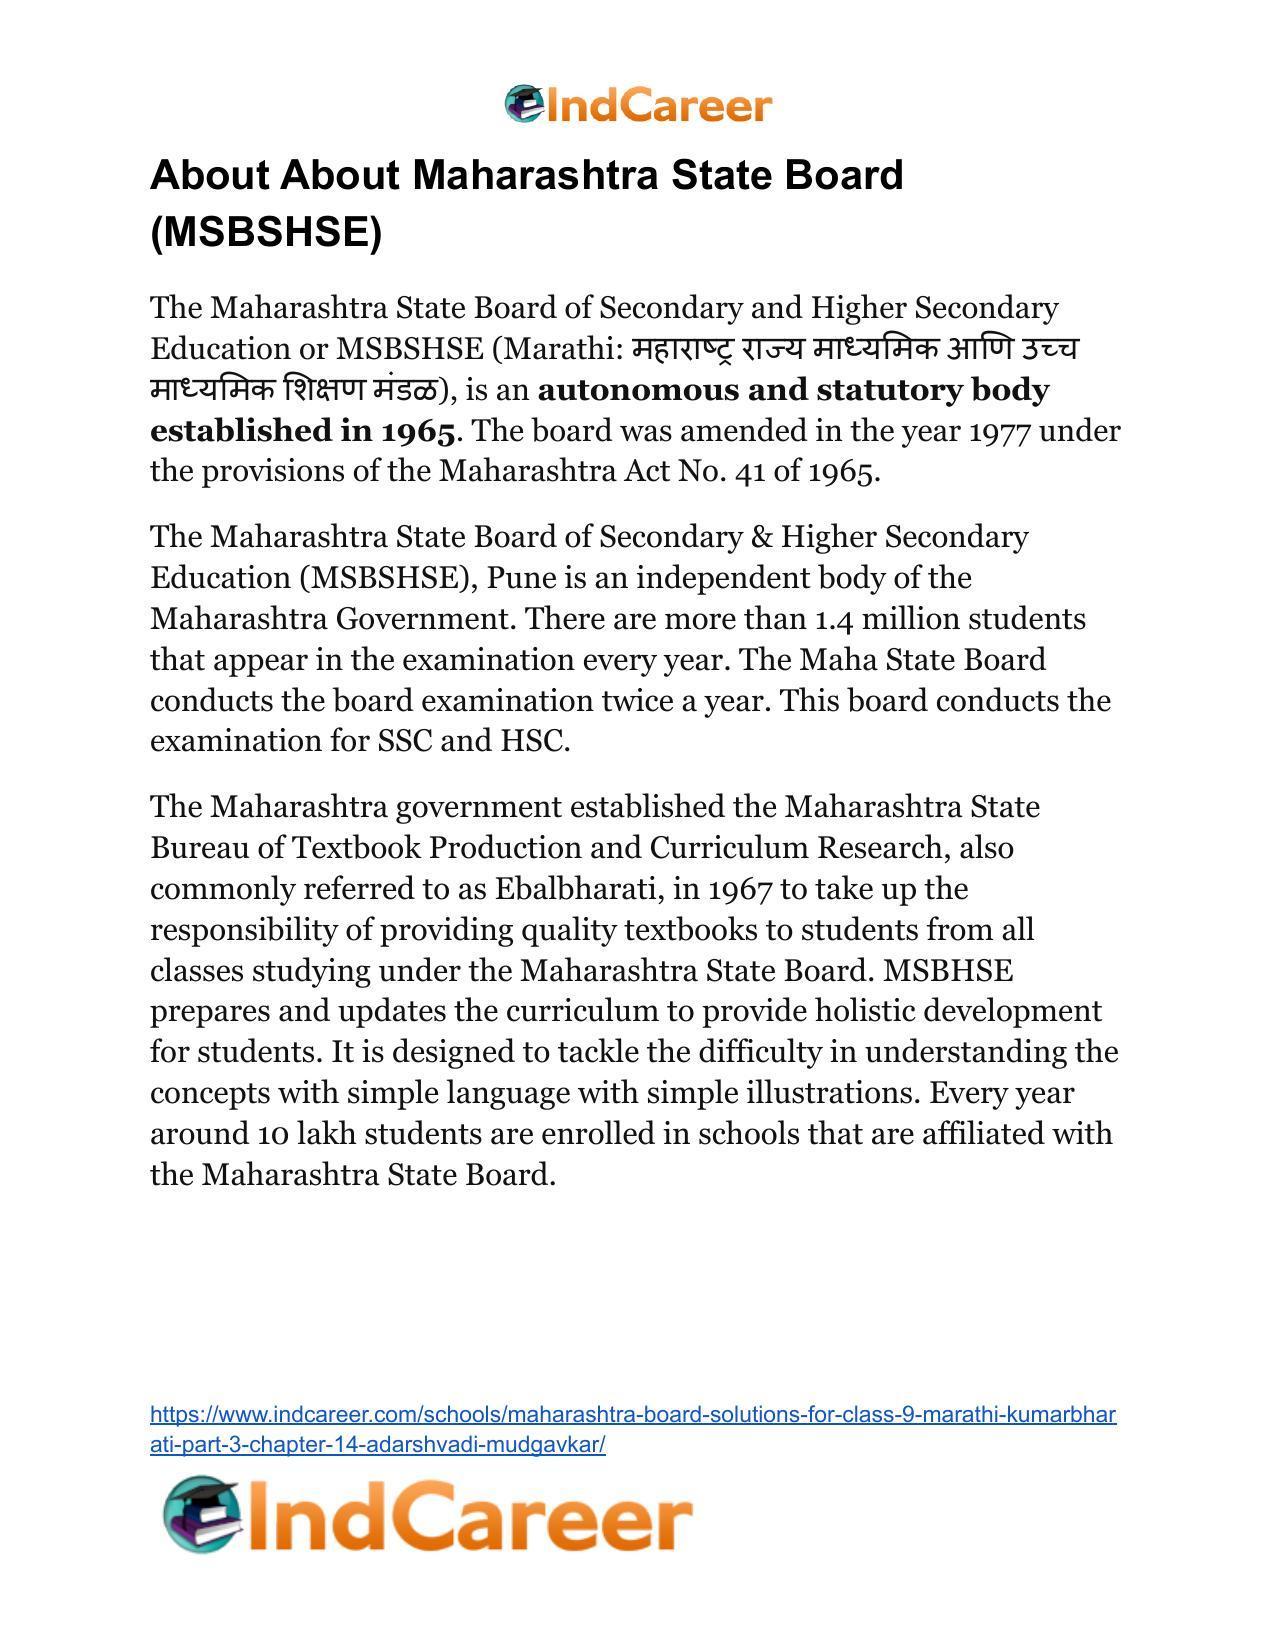 Maharashtra Board Solutions for Class 9- Marathi Kumarbharati (Part- 3): Chapter 14- आदर्शवादी मुळगावकर - Page 27